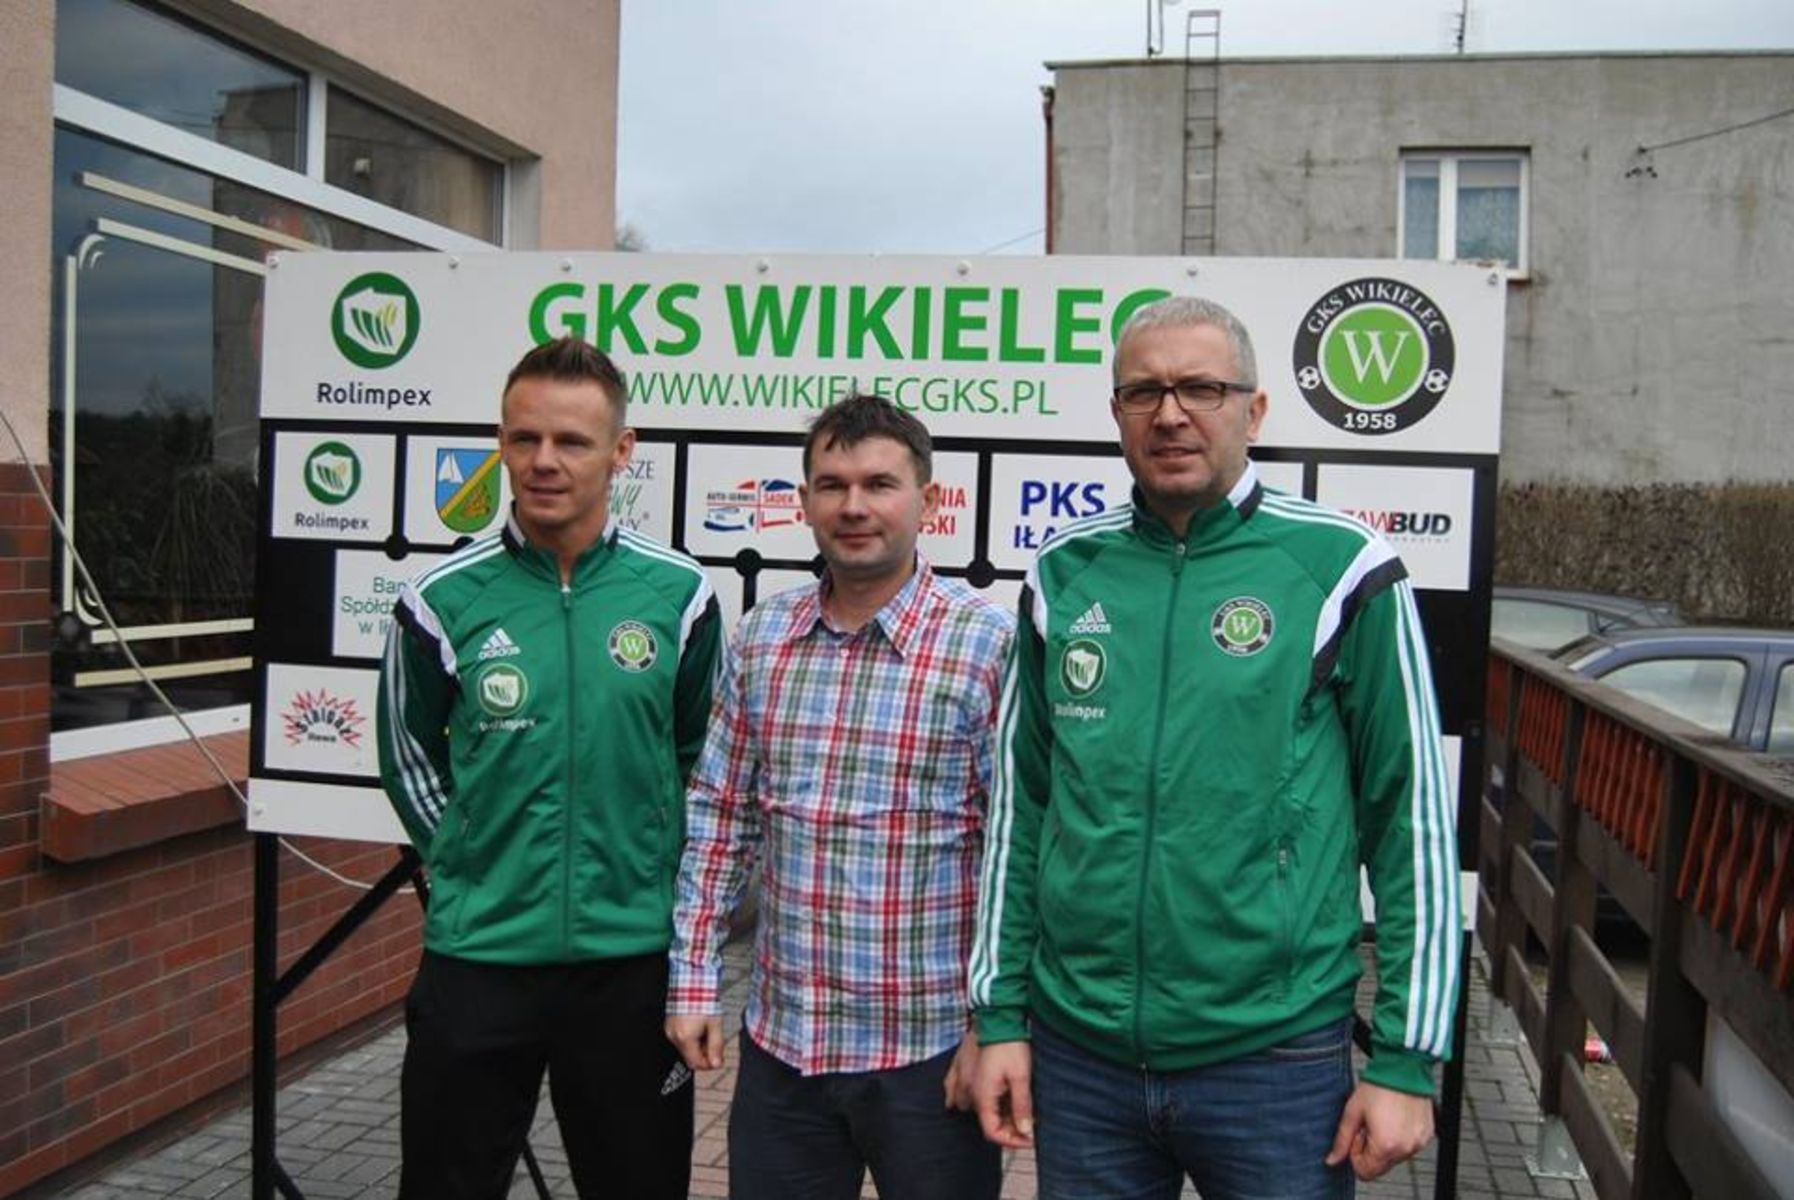 Fot. wikielecgks.pl